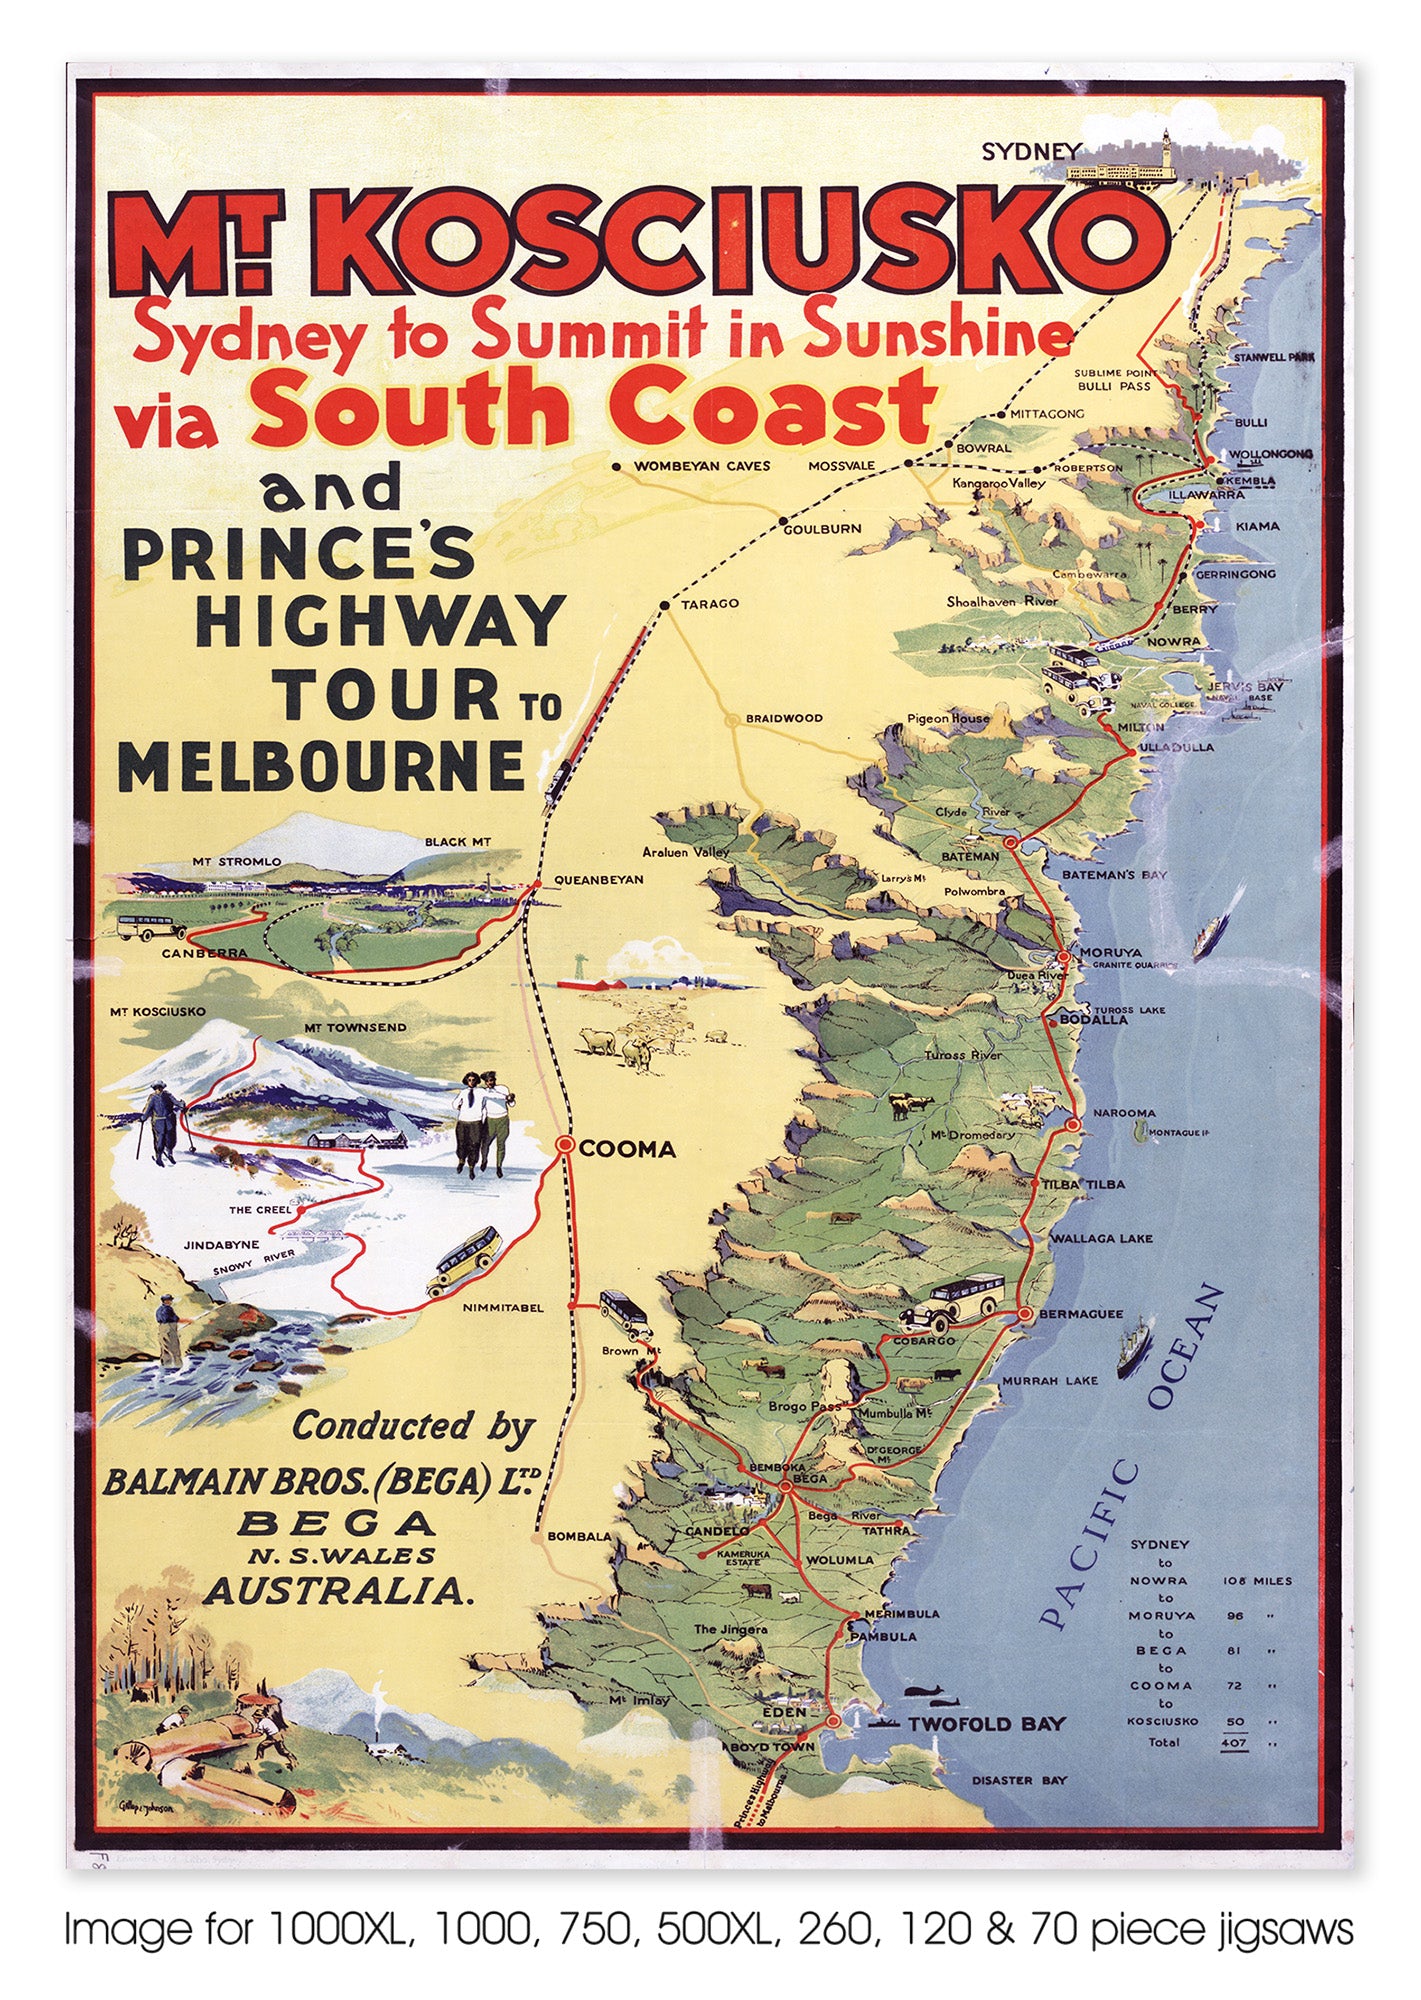 Mt Kosciusko : Sydney to Summit in Sunshine via South Coast, circa 1927